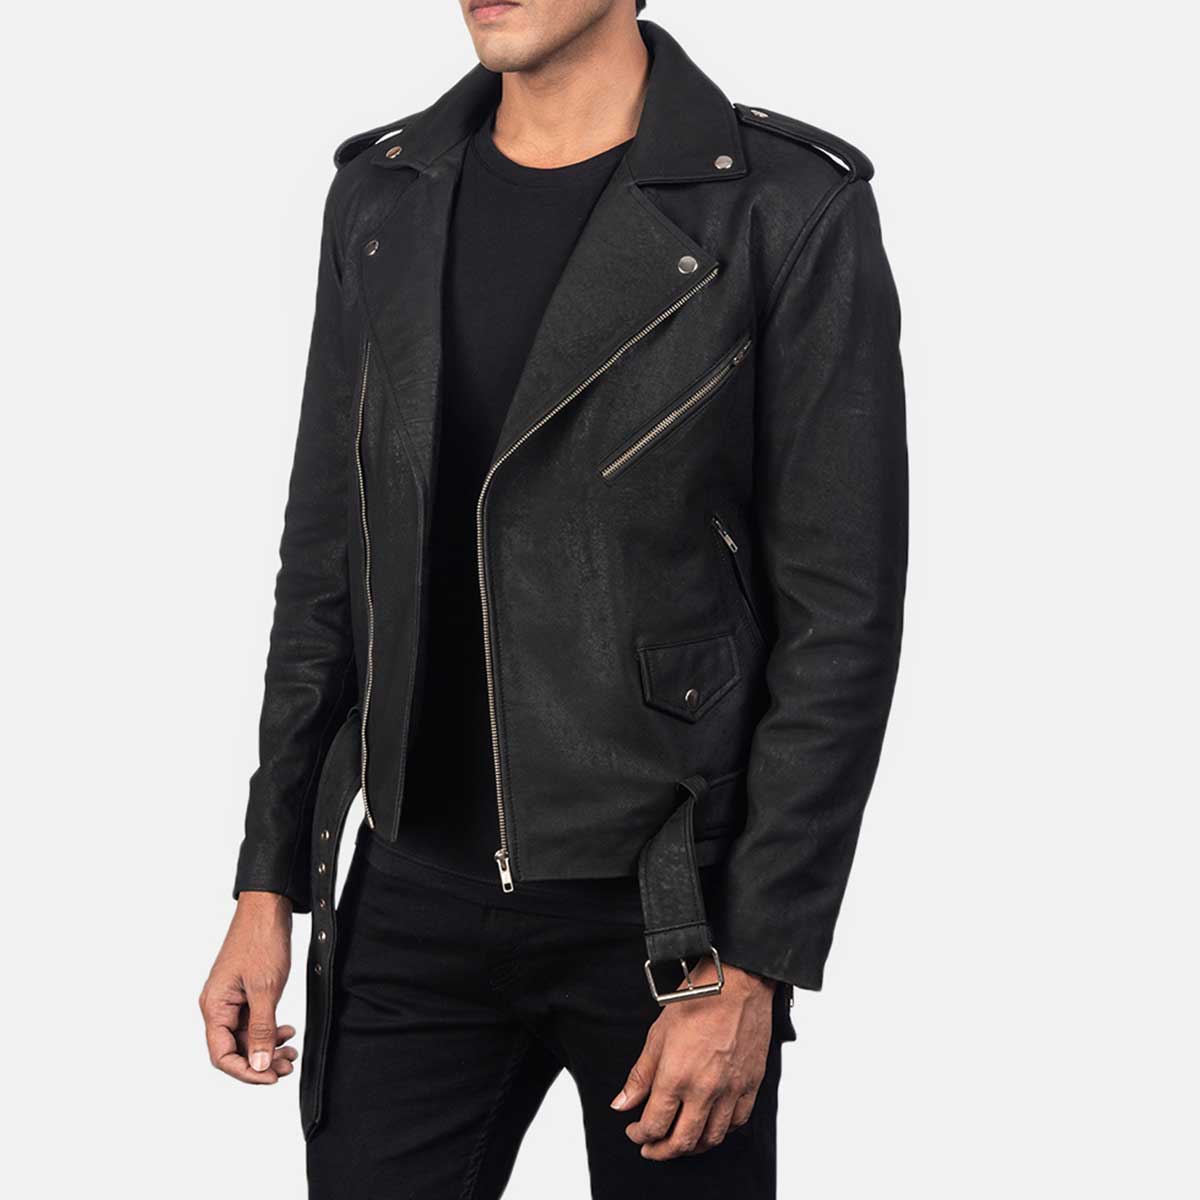 Black Leather Biker Jacket Allaric Alley Distressed - The Vintage Leather